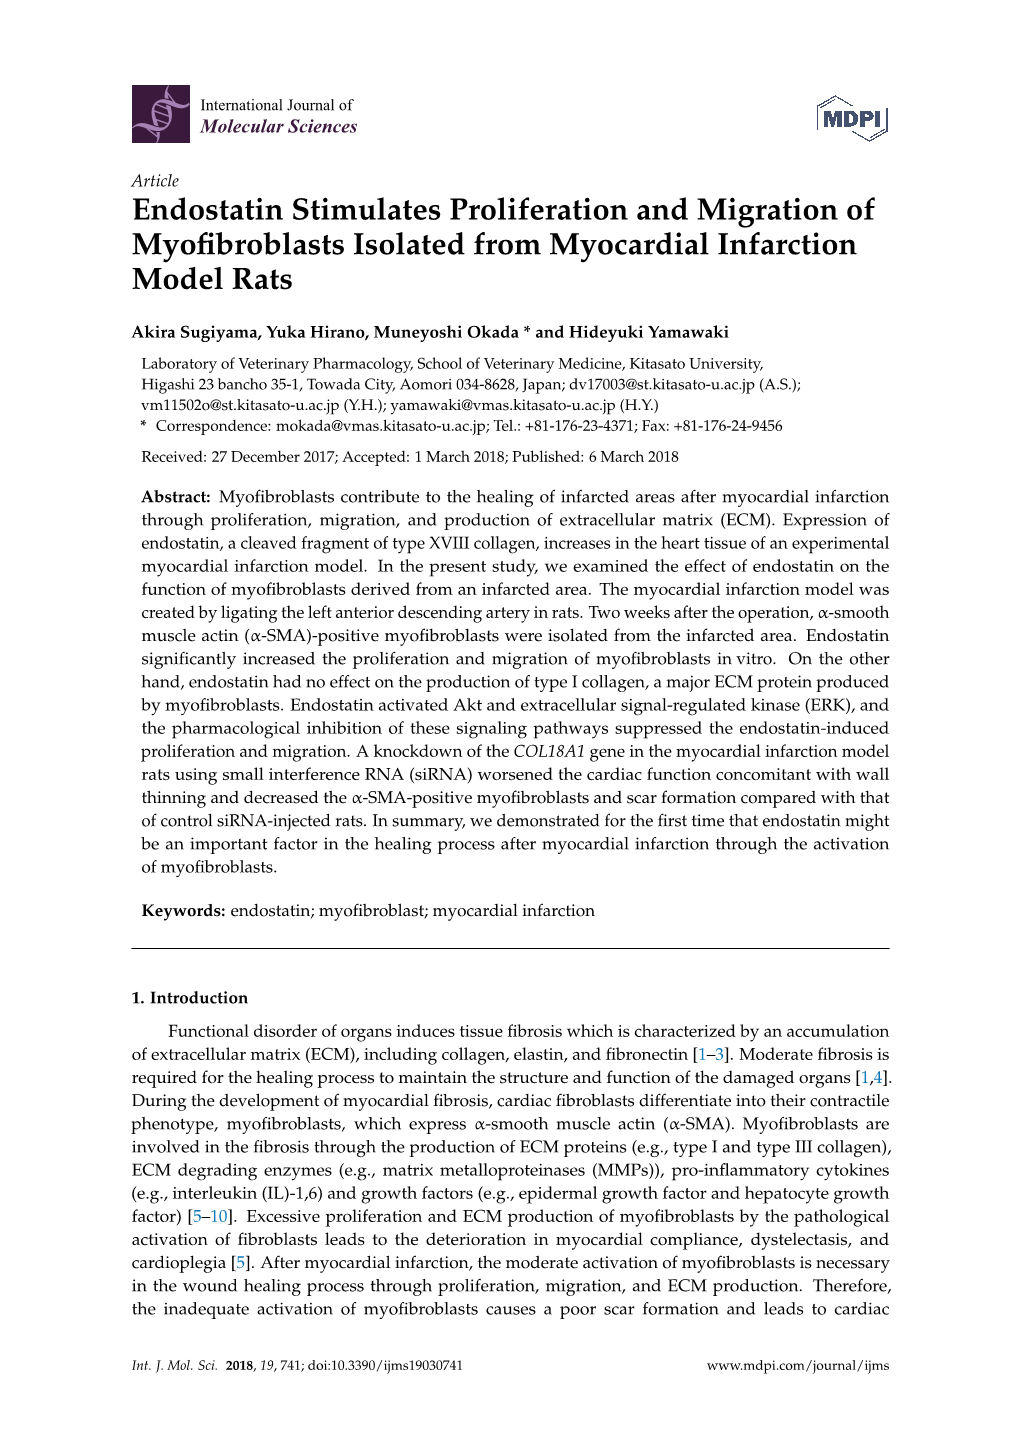 Endostatin Stimulates Proliferation and Migration of Myofibroblasts